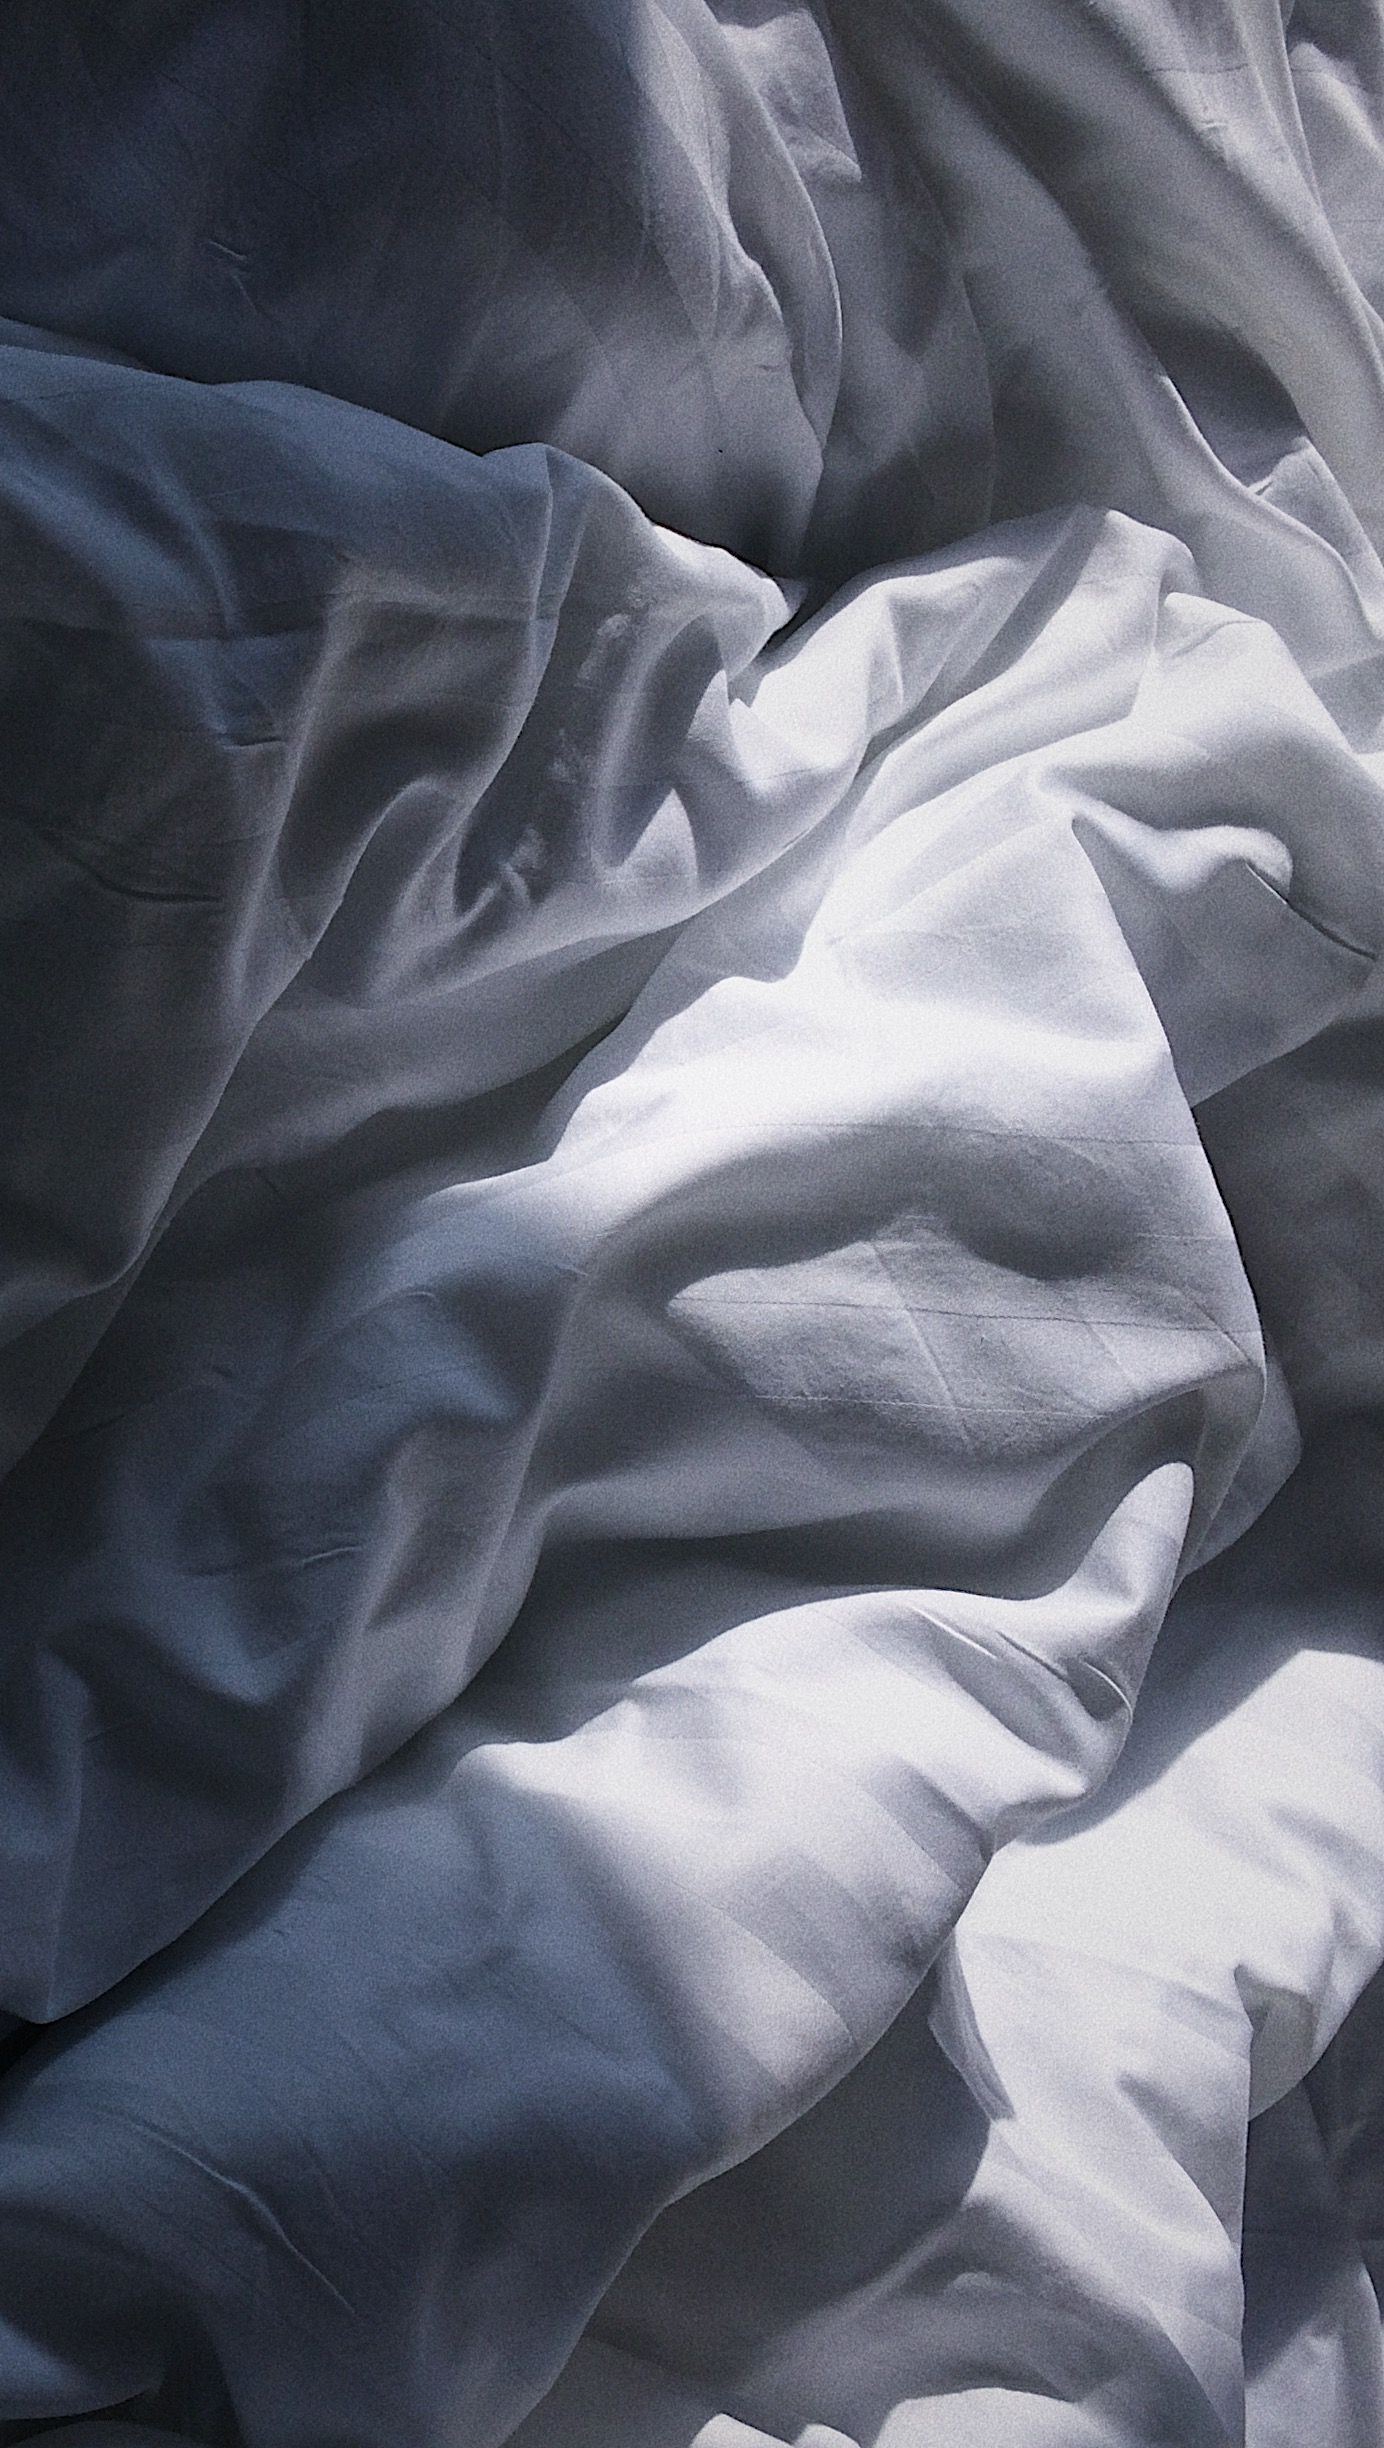 Aesthetic White Bed Sheets .teahub.io